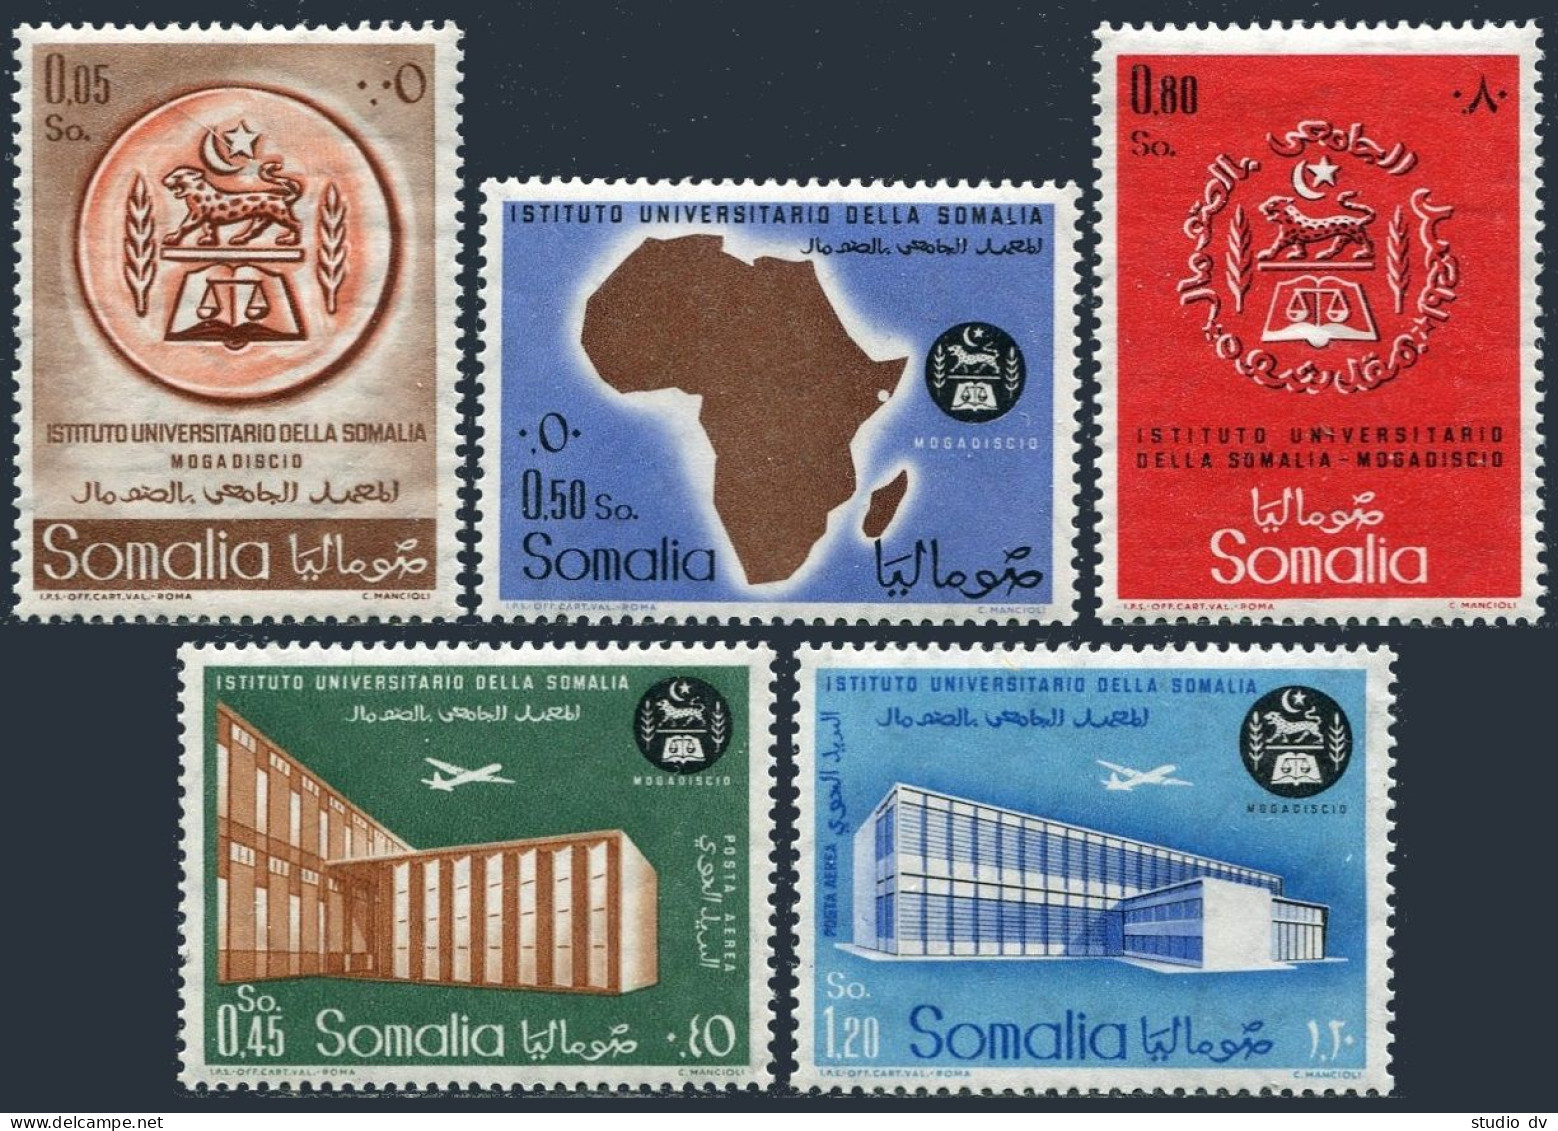 Somalia 236-238,C65-C66, MNH. Mi 367-371. University Institute, 1960. Arms, Map. - Mali (1959-...)